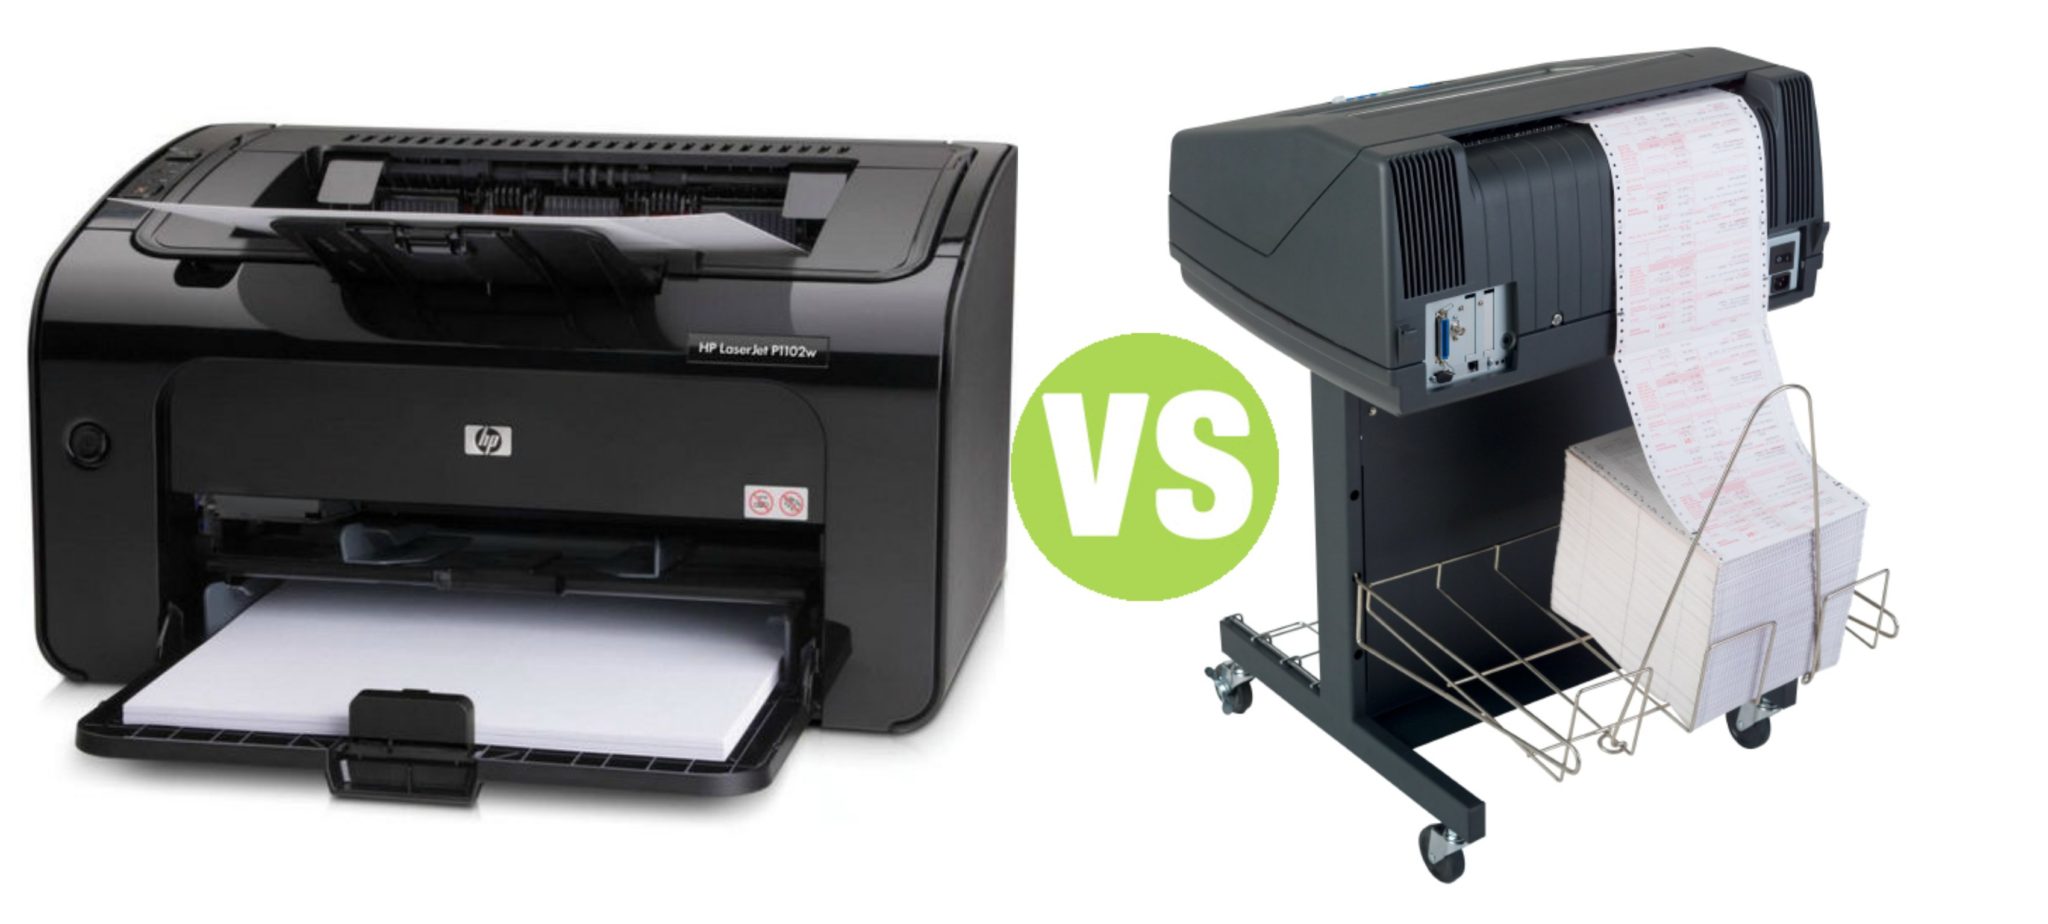 Between Line Printer and Laser Printer